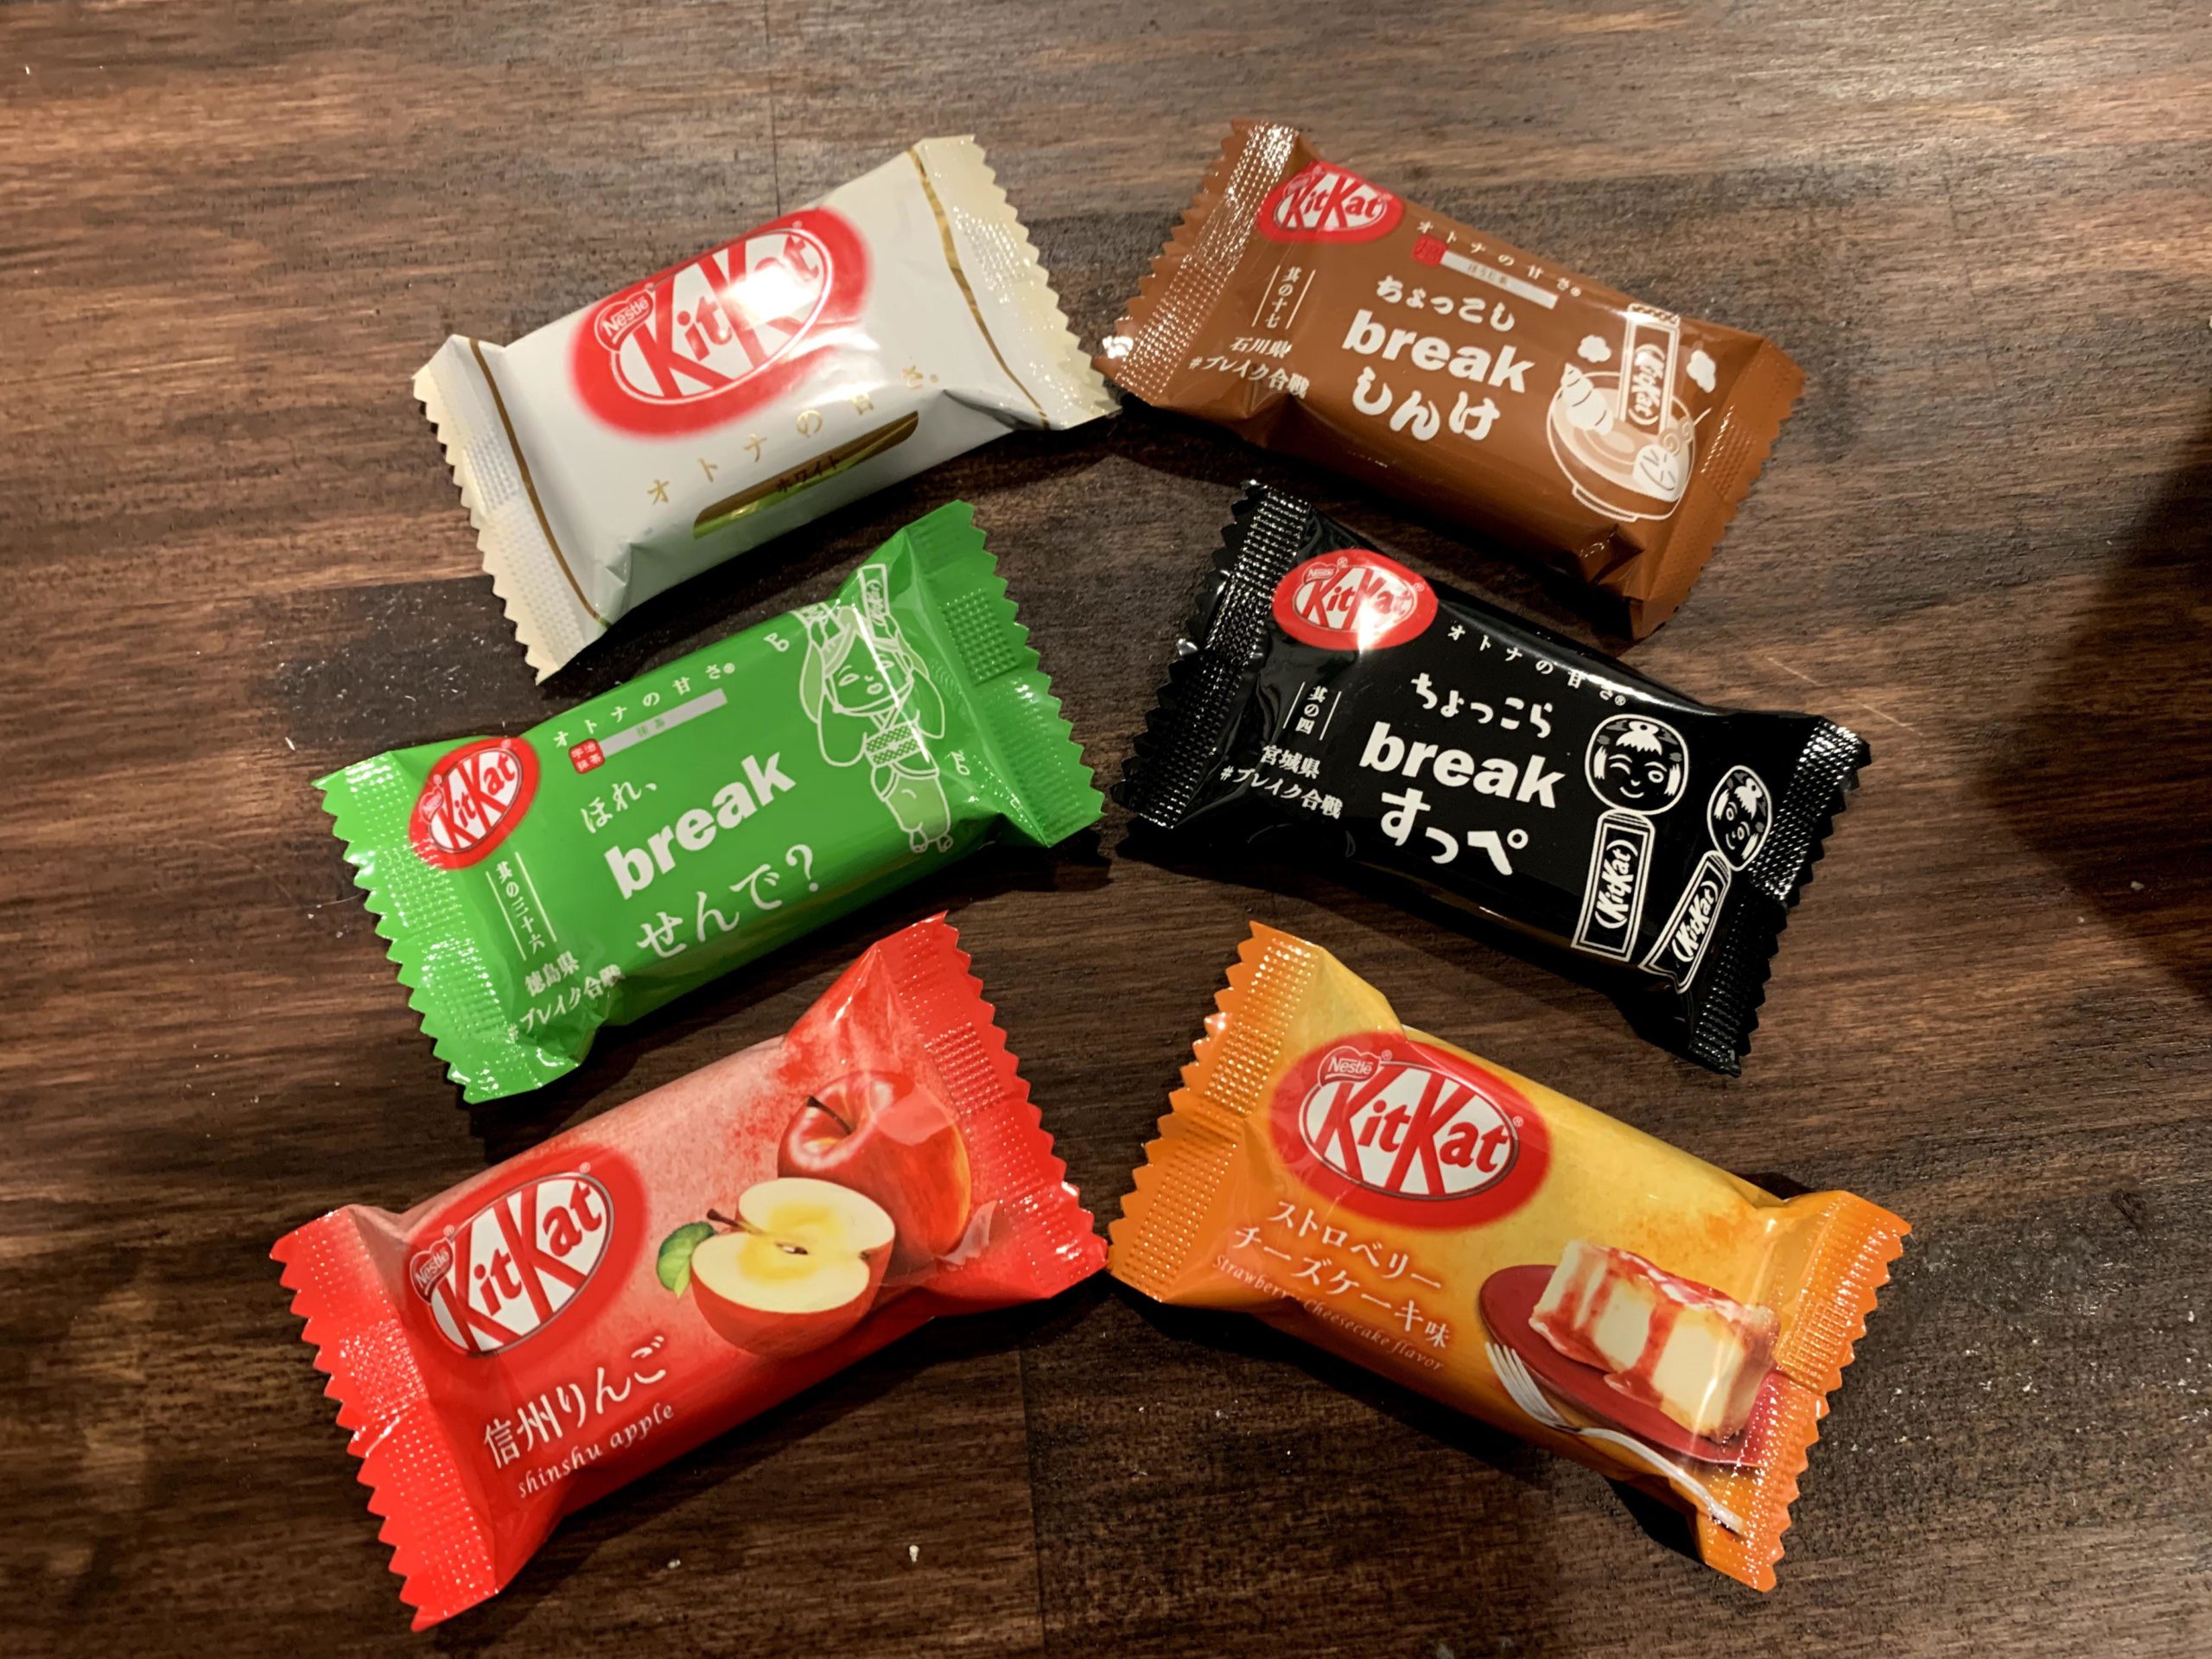 Japan+gets+all+the+good+KitKat